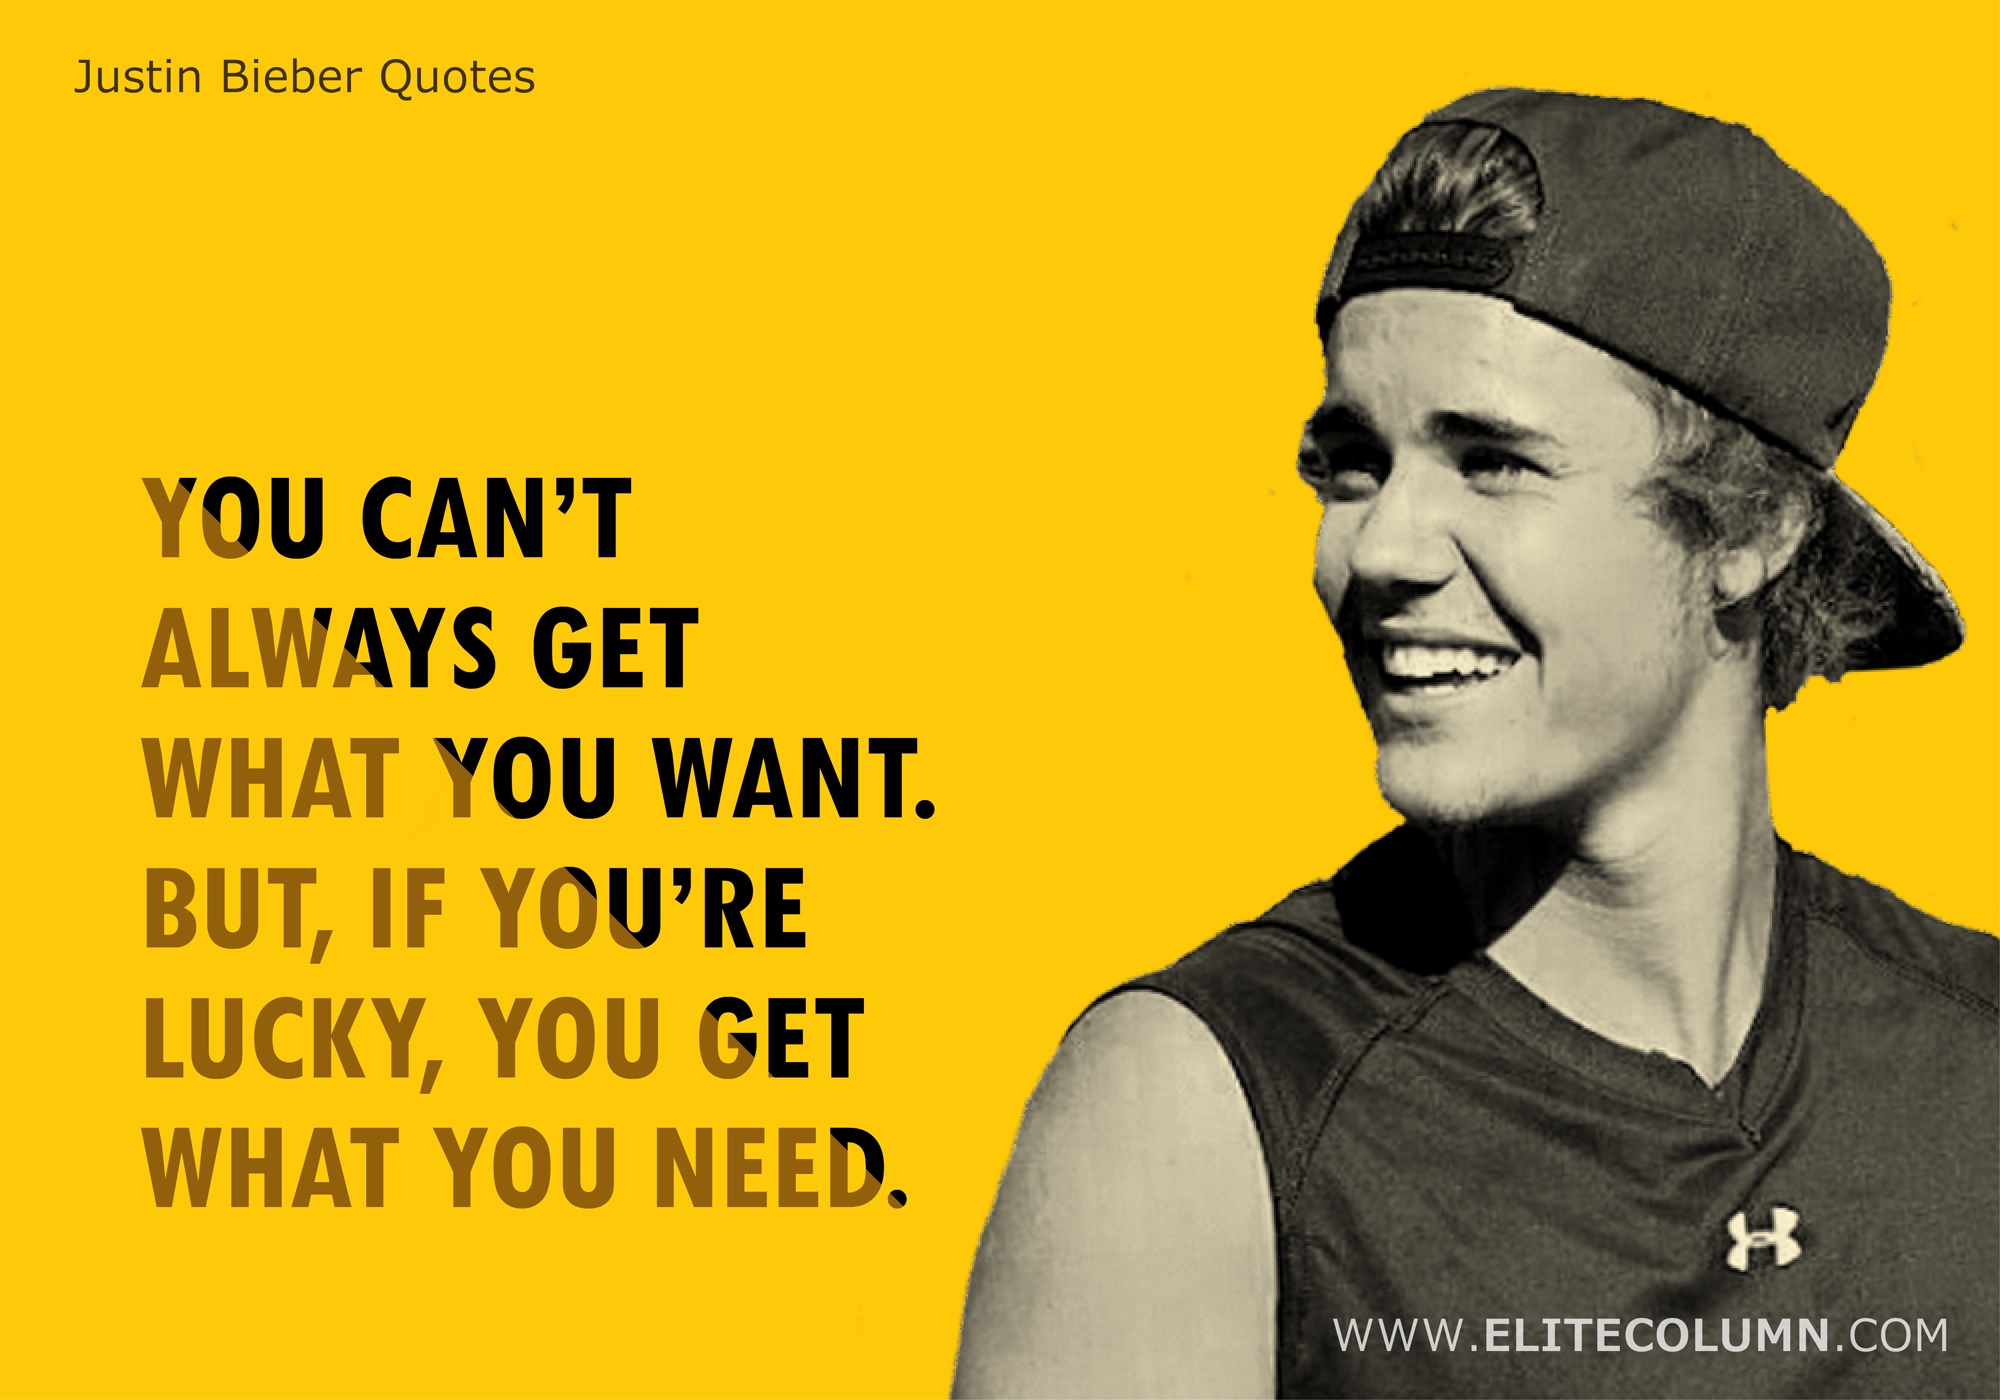 Justin Bieber Quotes (12)